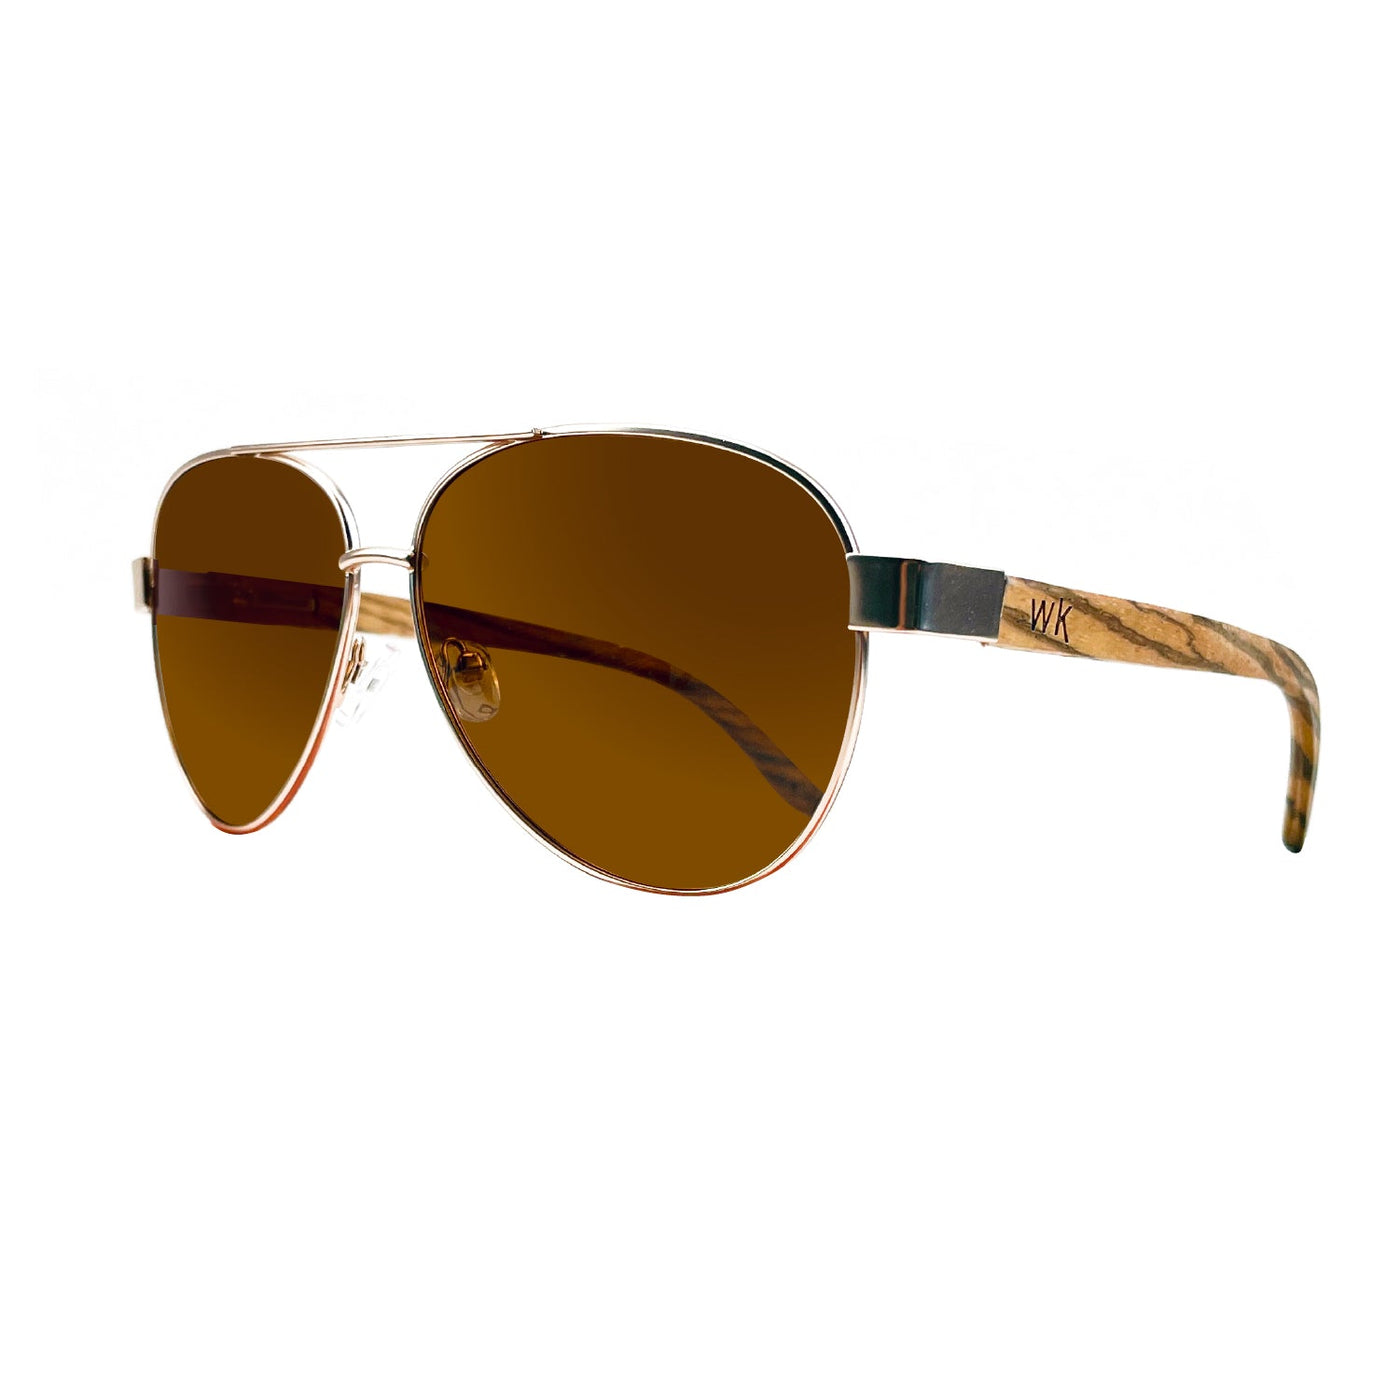 Wood Sunglasses Polarised for Men and Women - Aviator